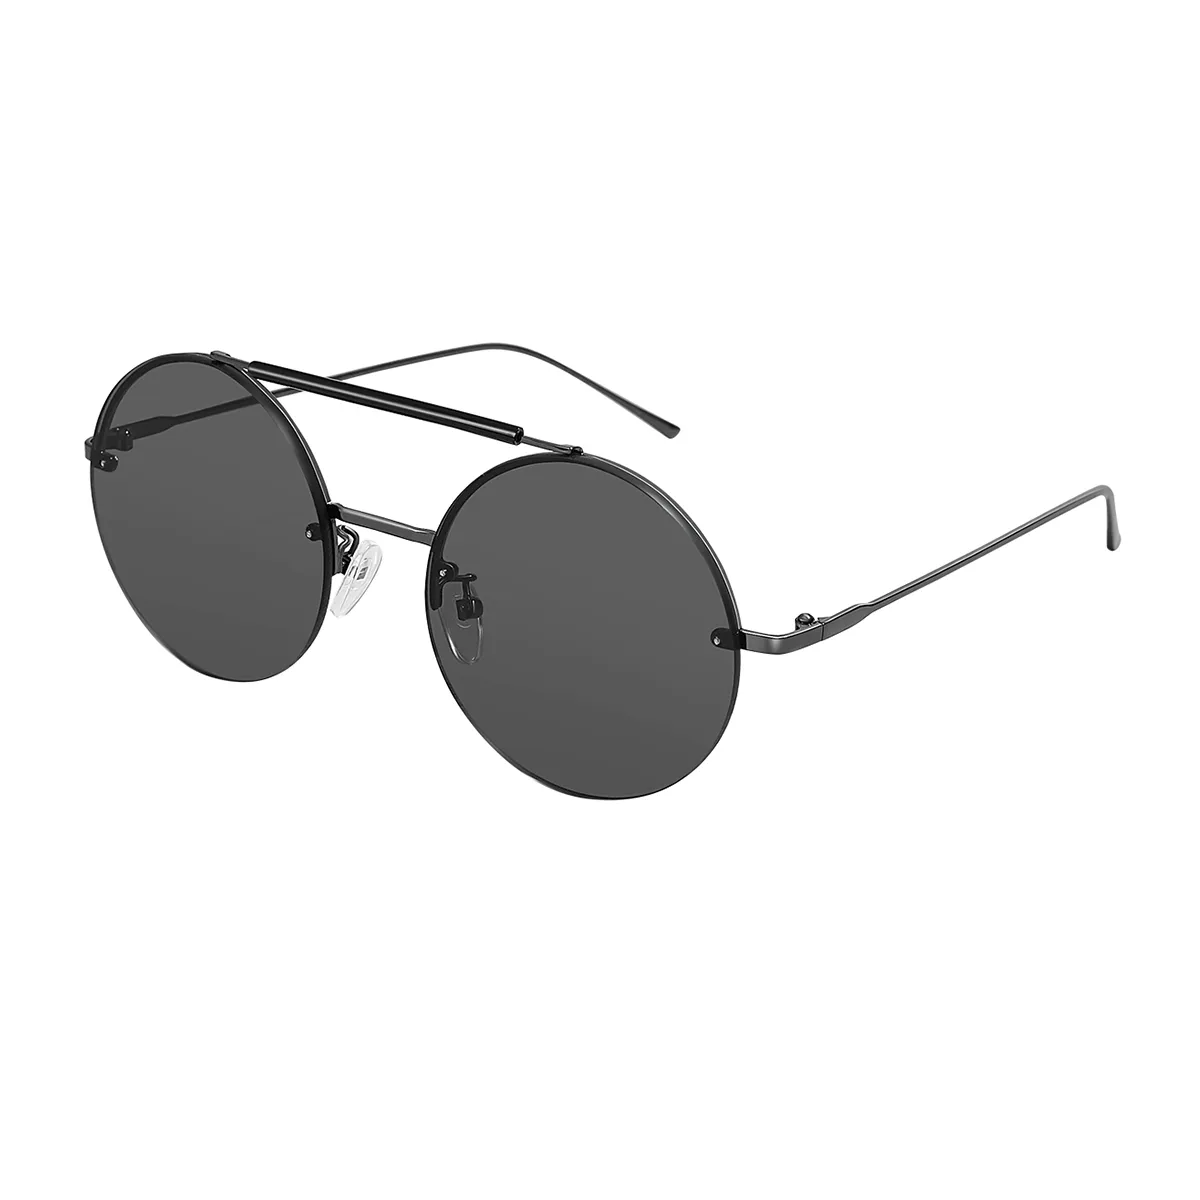 Evie - Round Gray Sunglasses for Women